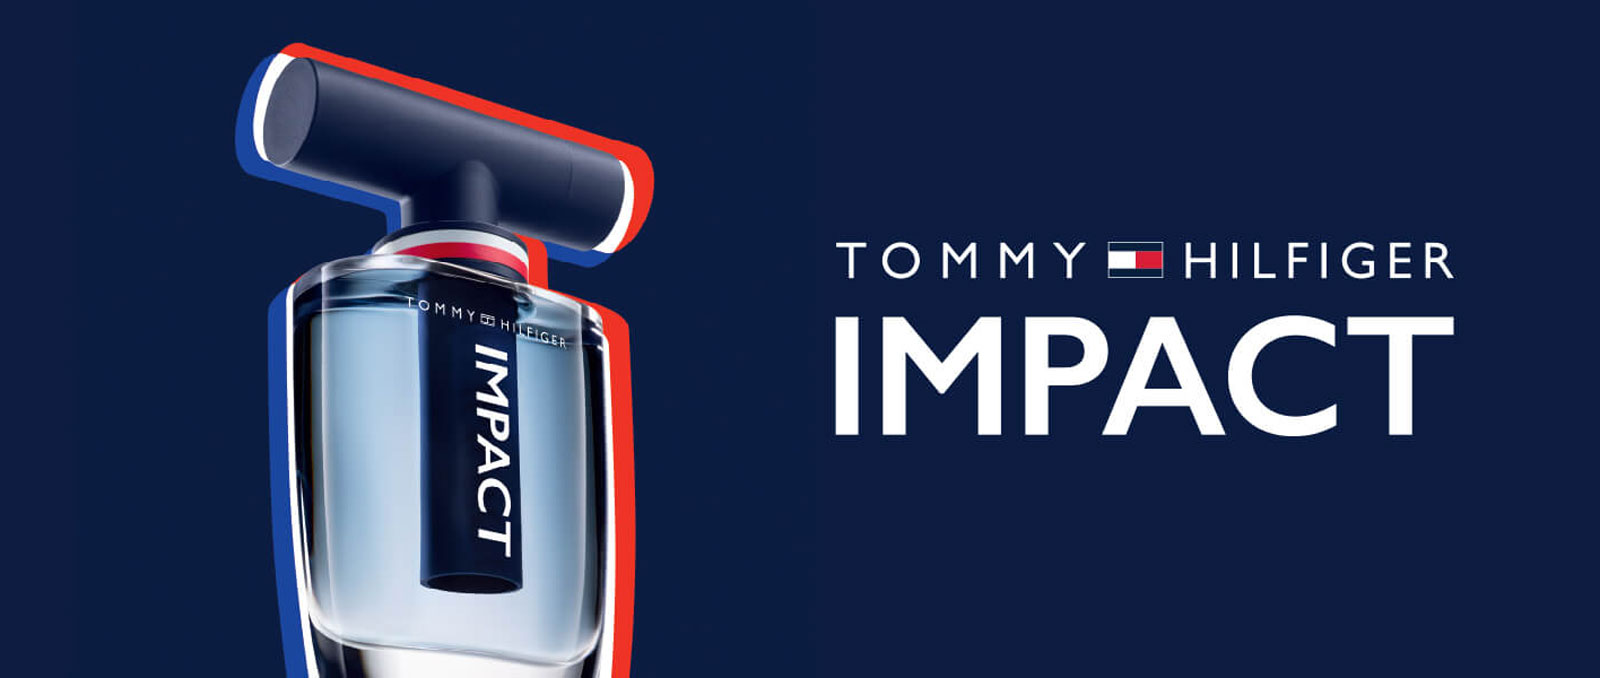 Tommy-HIlfiger-Impact_w1600